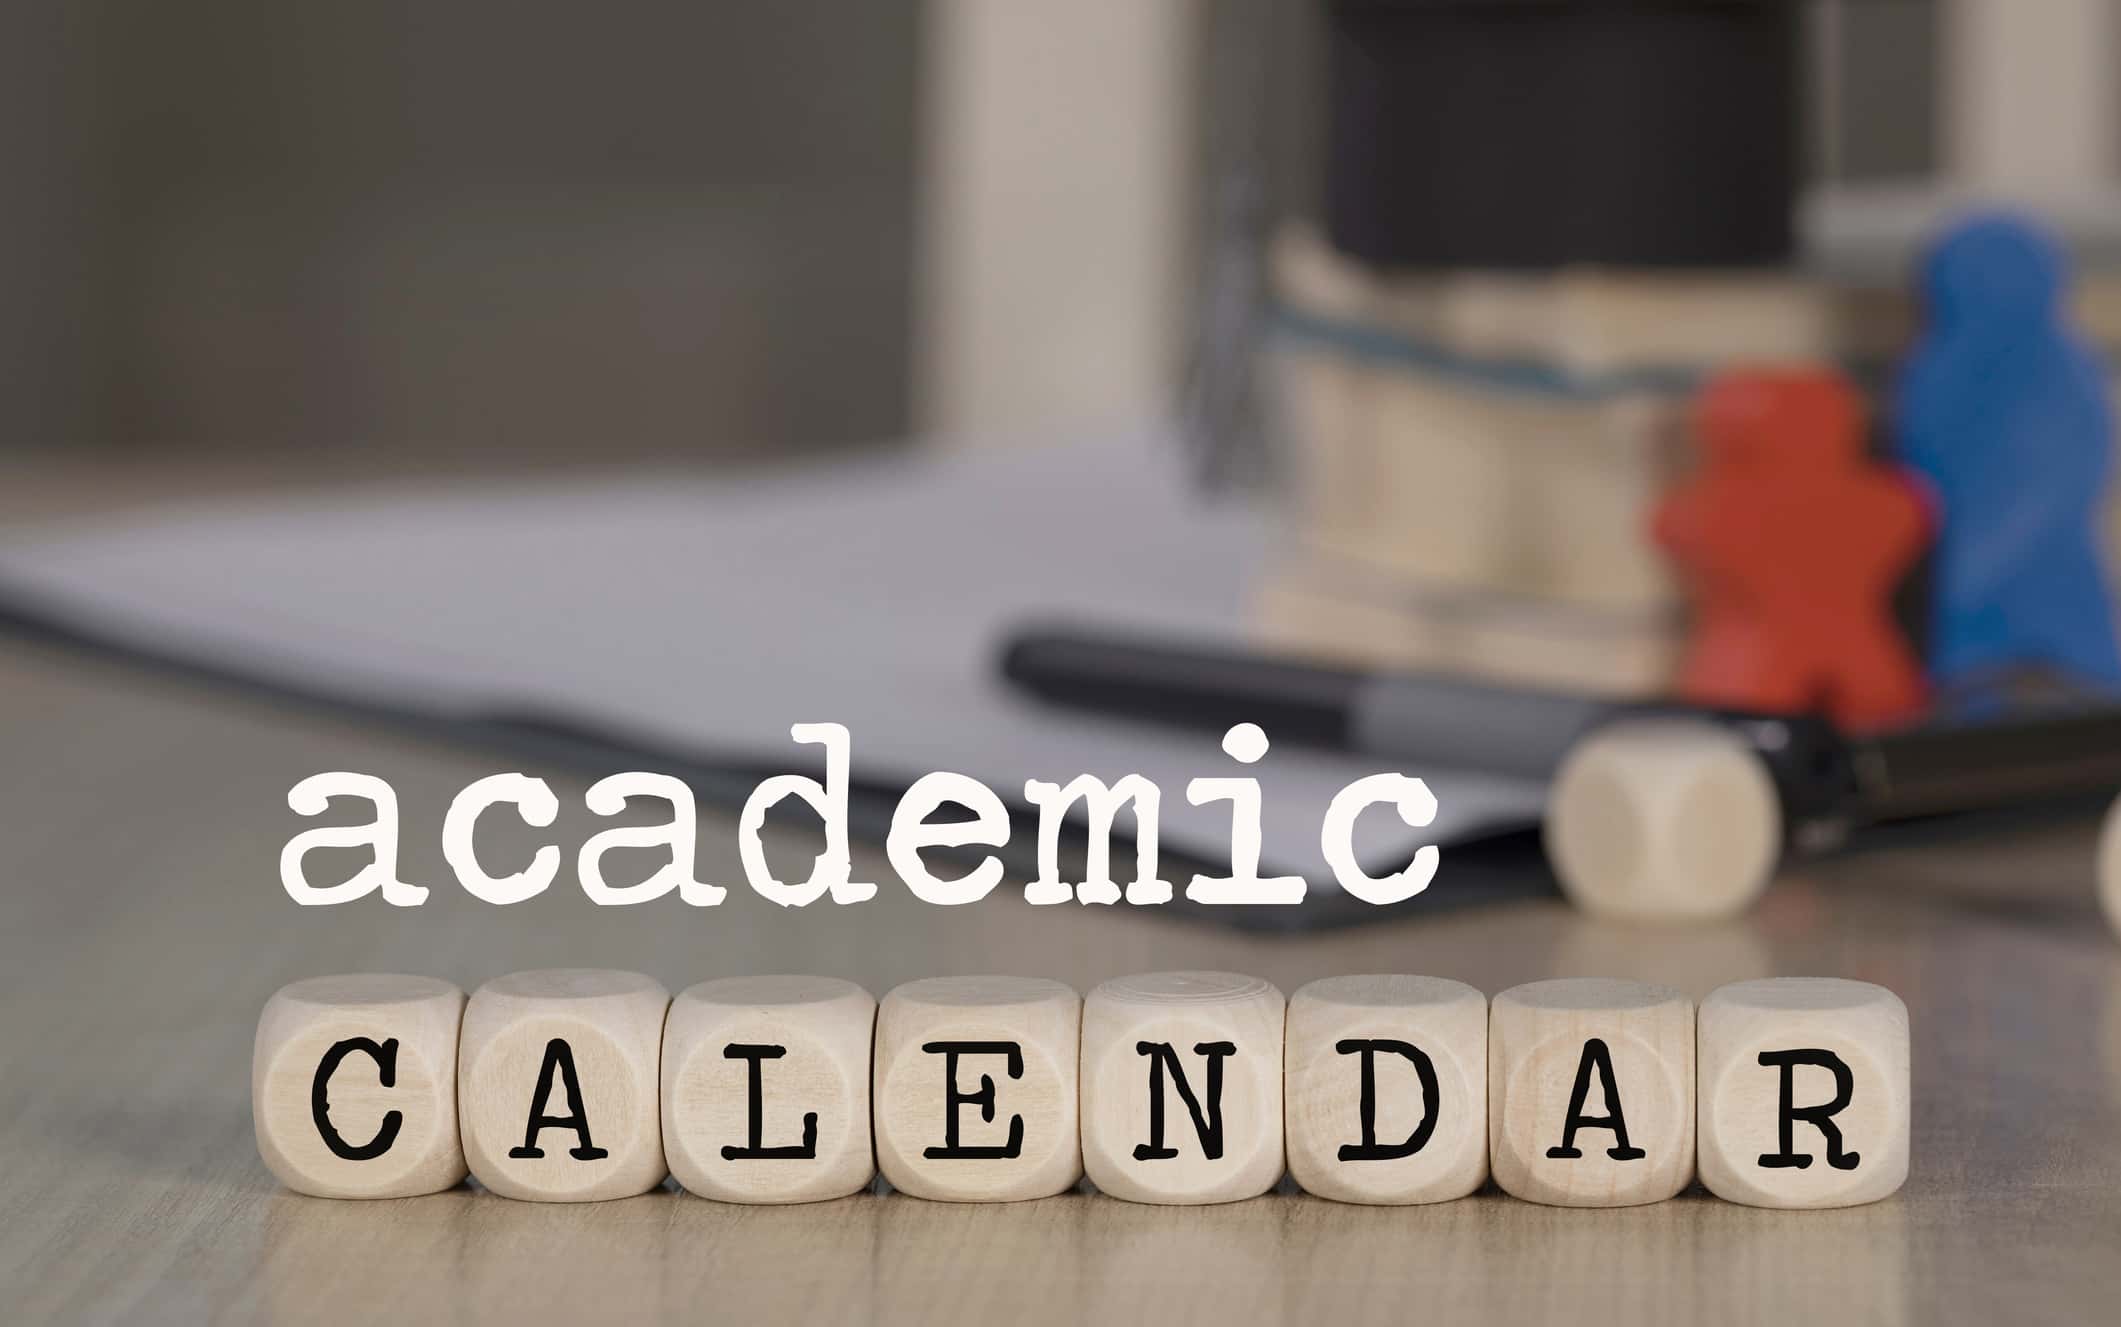 southwestern-michigan-college-board-adjusts-spring-academic-calendar-moody-on-the-market